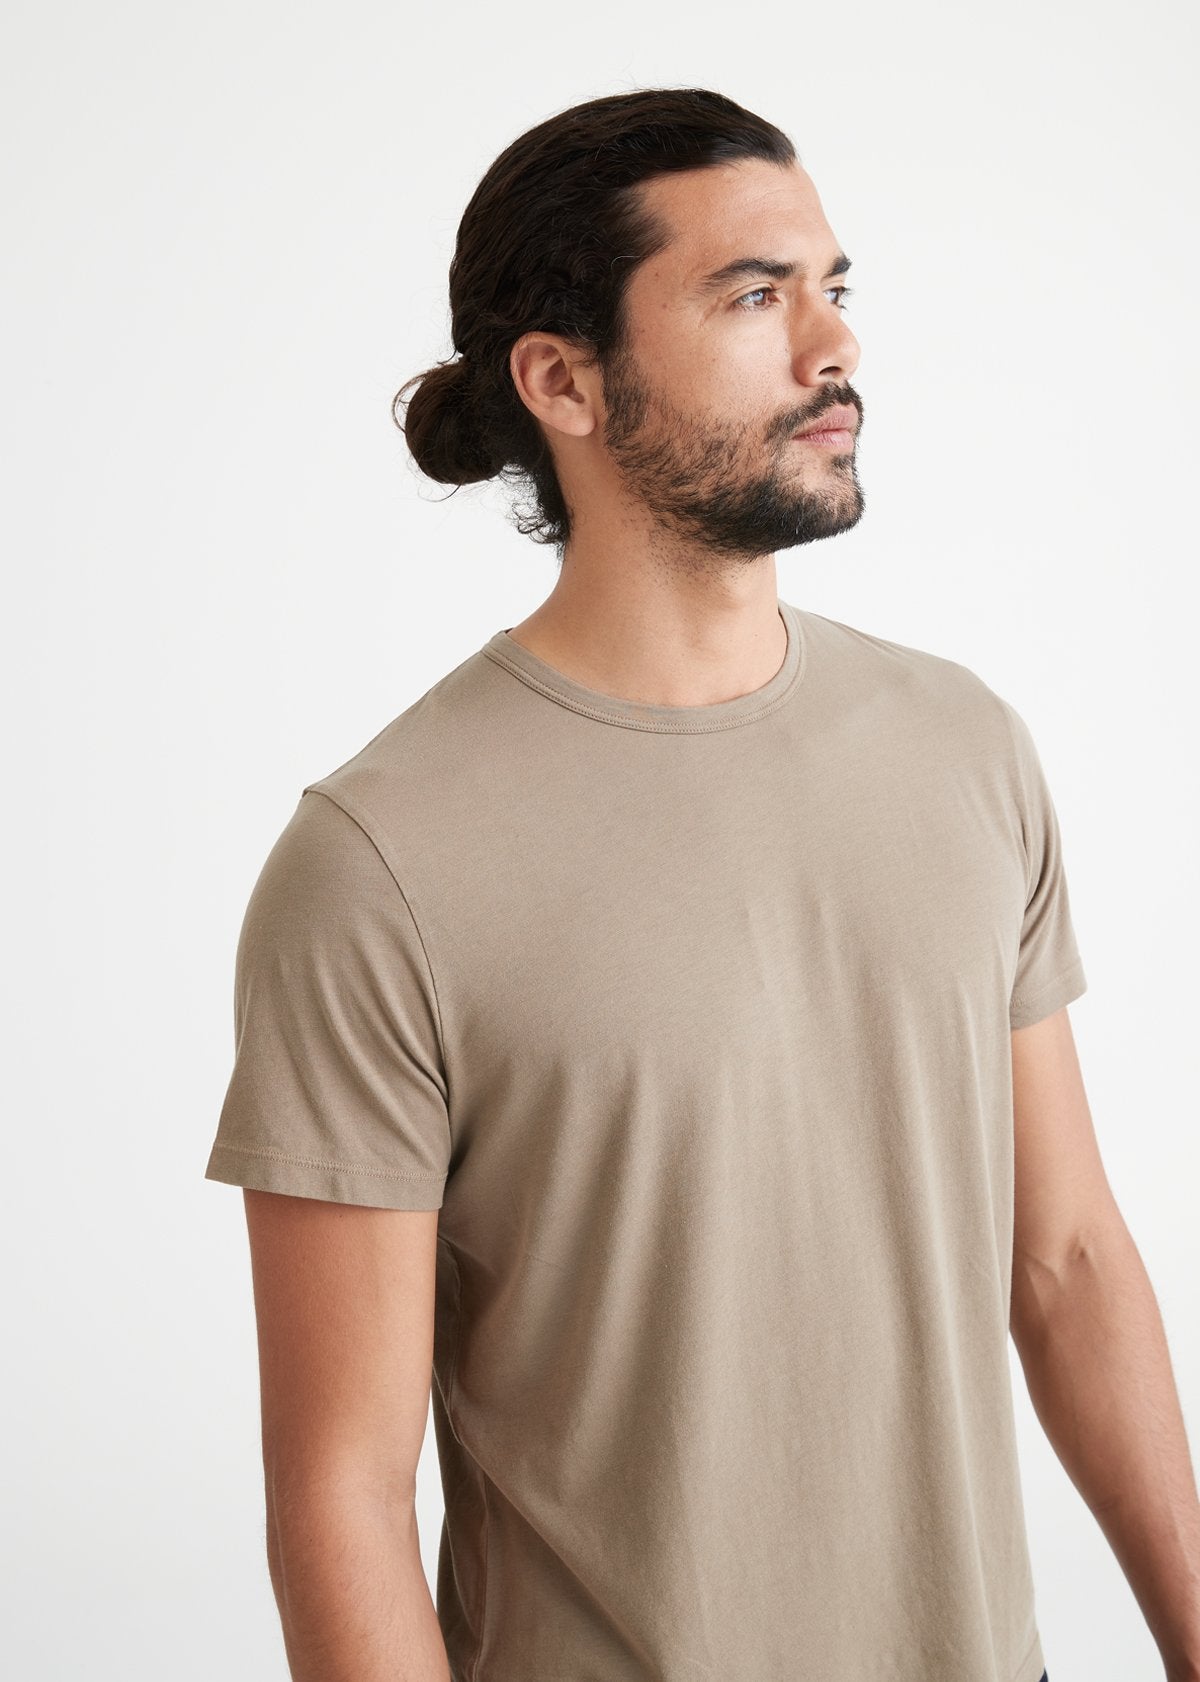 mens taupe soft lightweight t-shirt front close